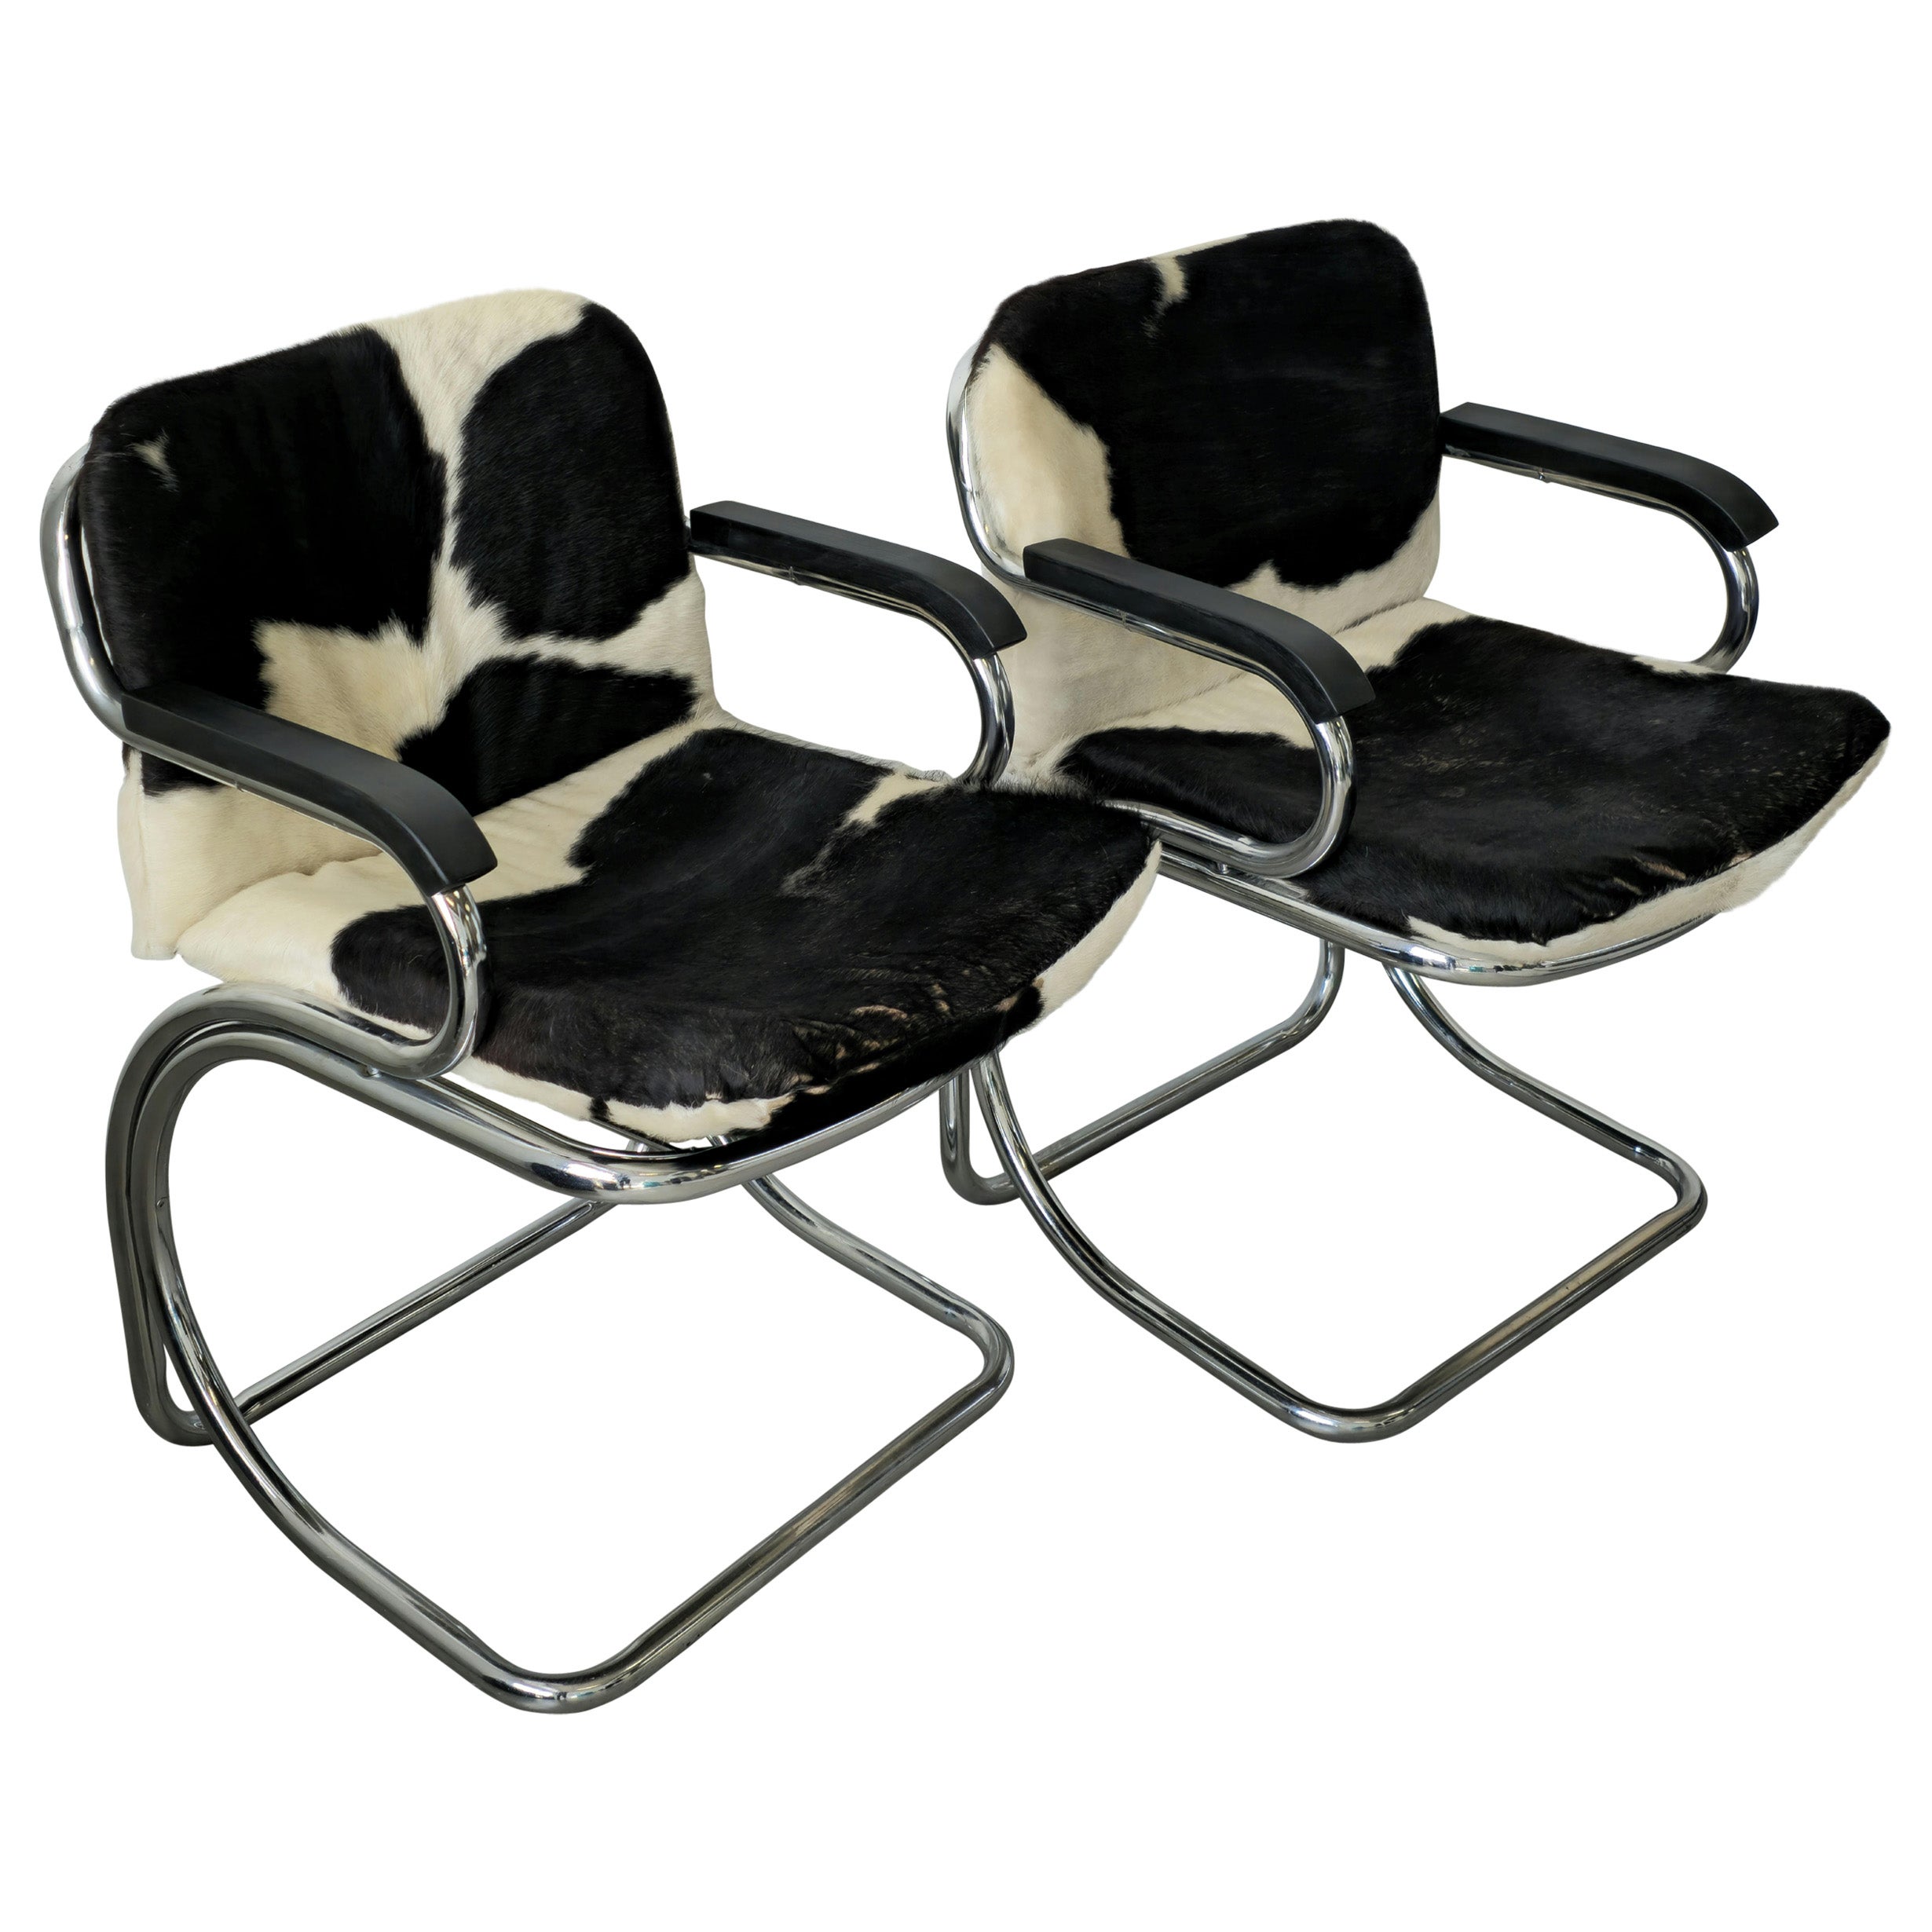 1970s Gastone Rinaldi Chrome Chairs  For Sale